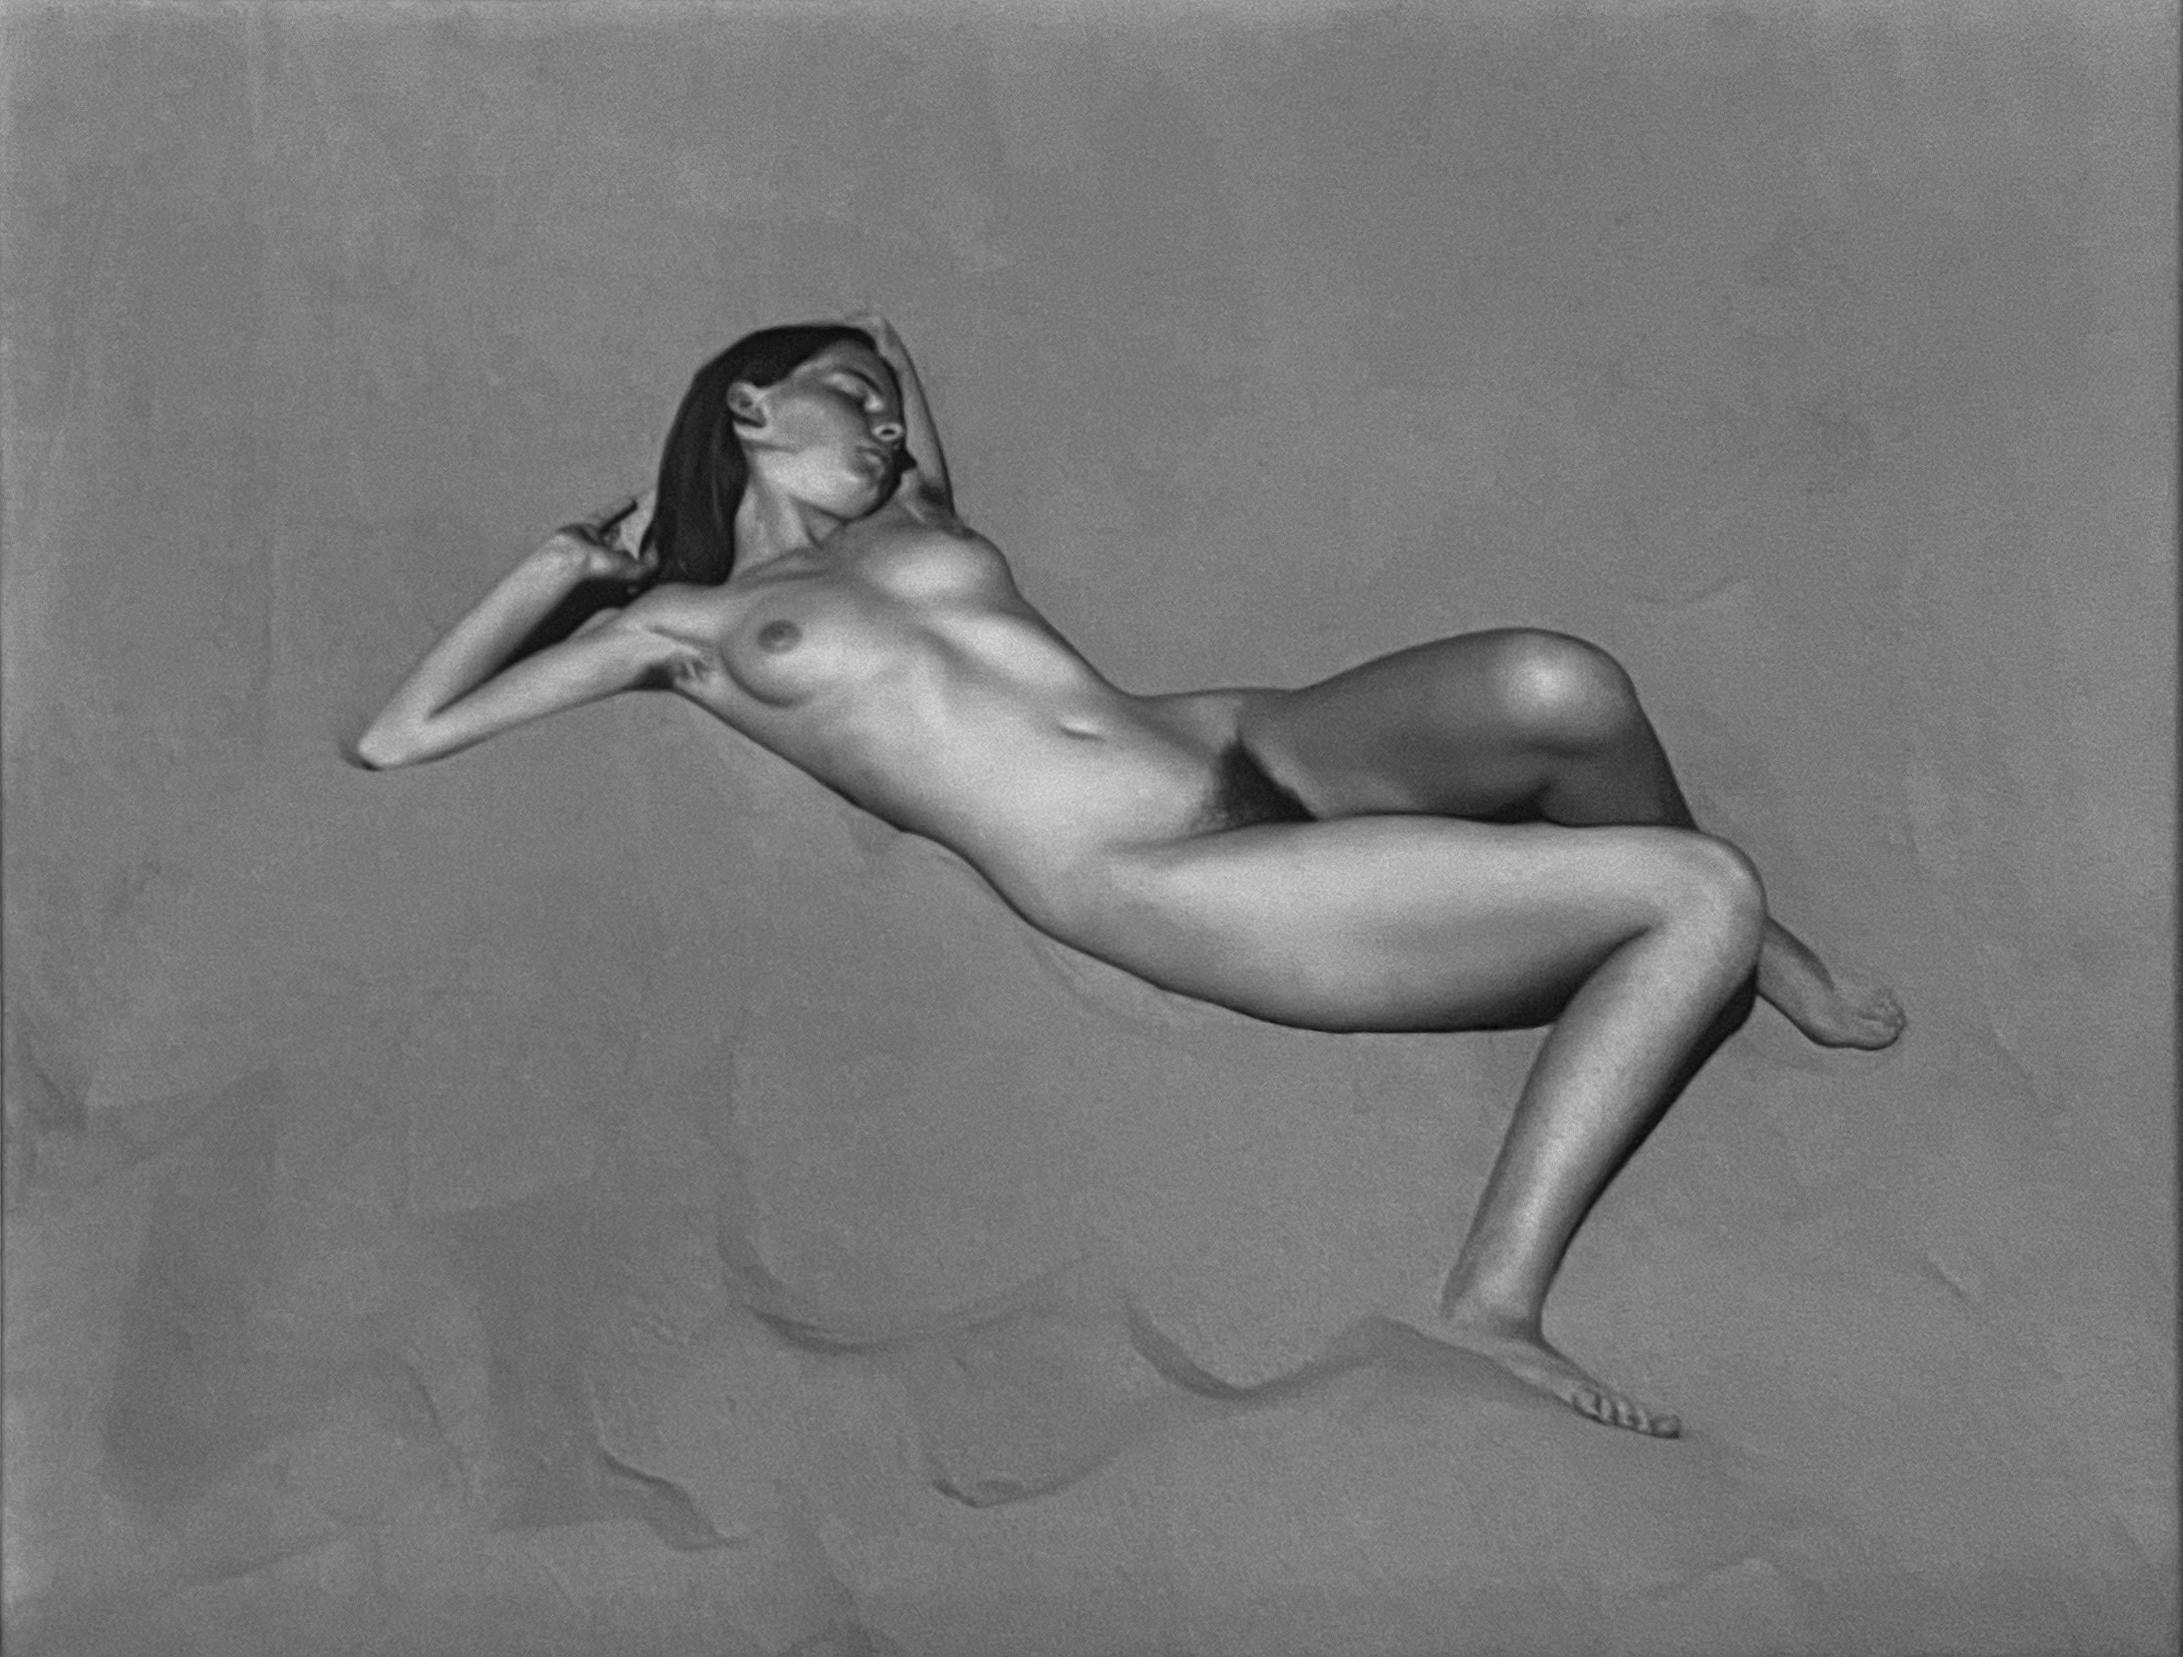 Edward Weston Nude Photograph - Nude on Sand, Oceano, 1936